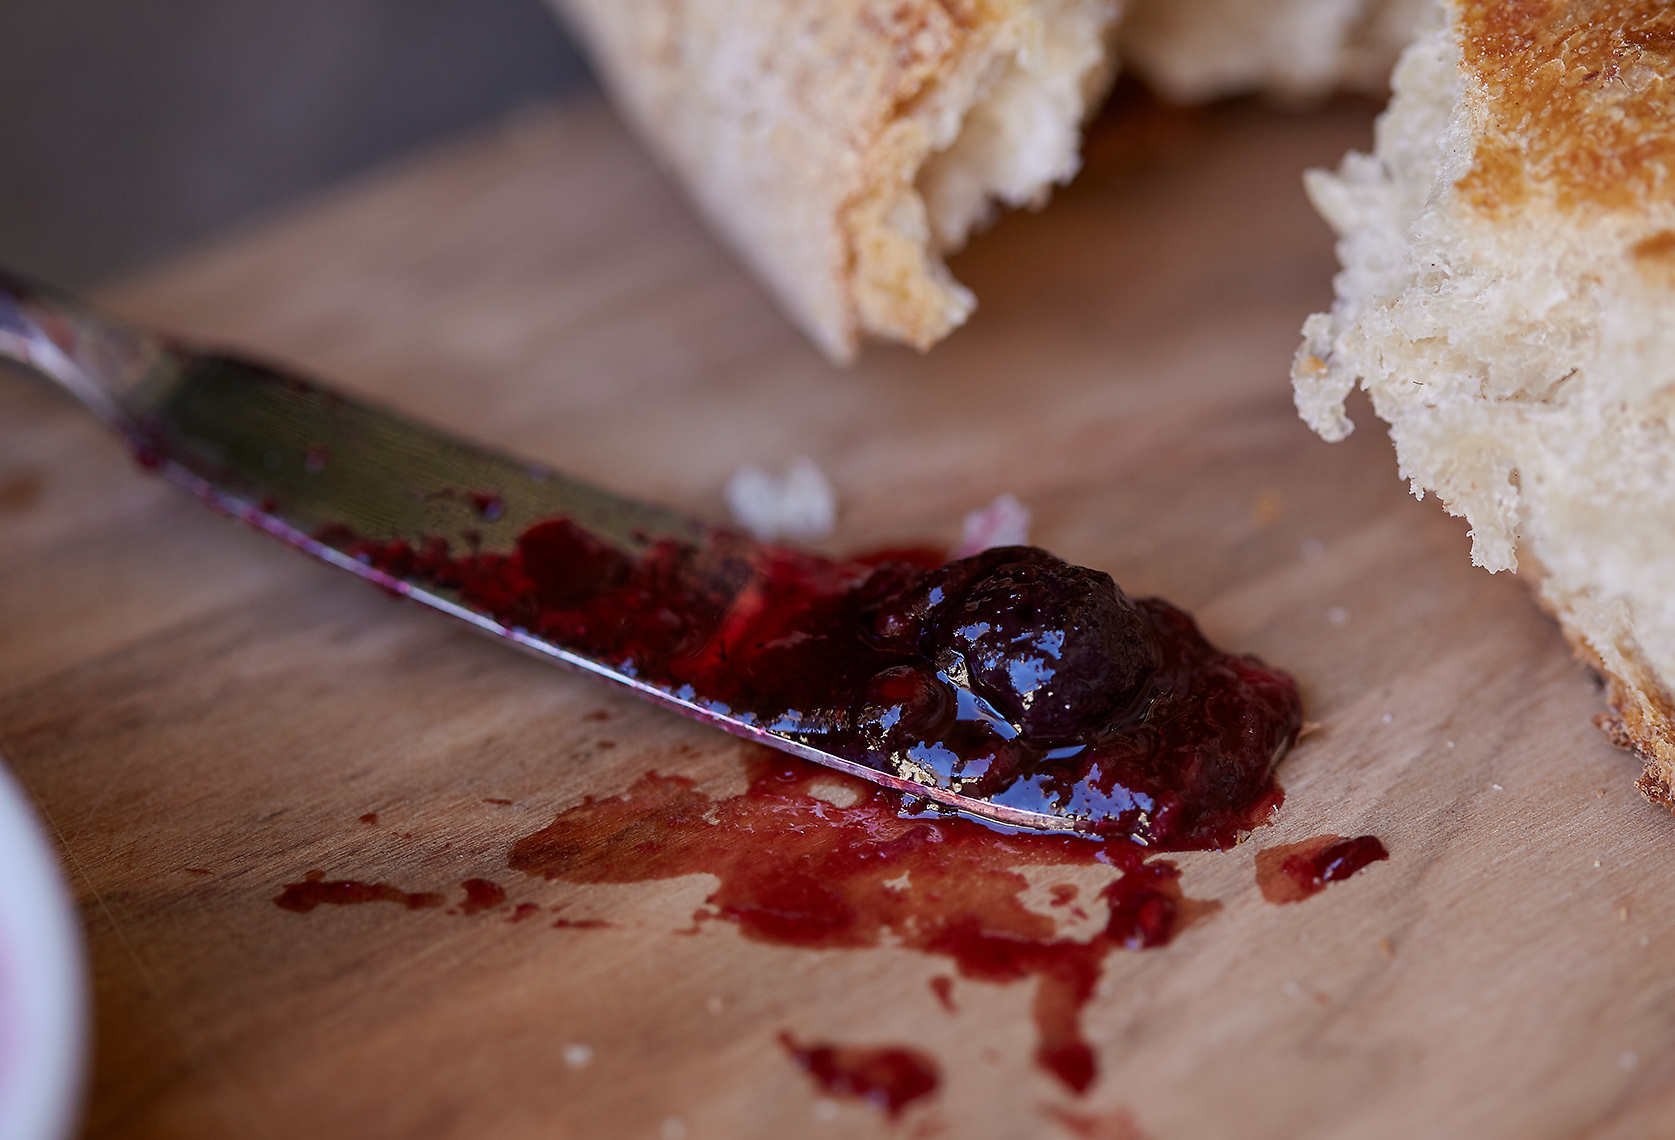 Jam on knife. Bread on cutting board